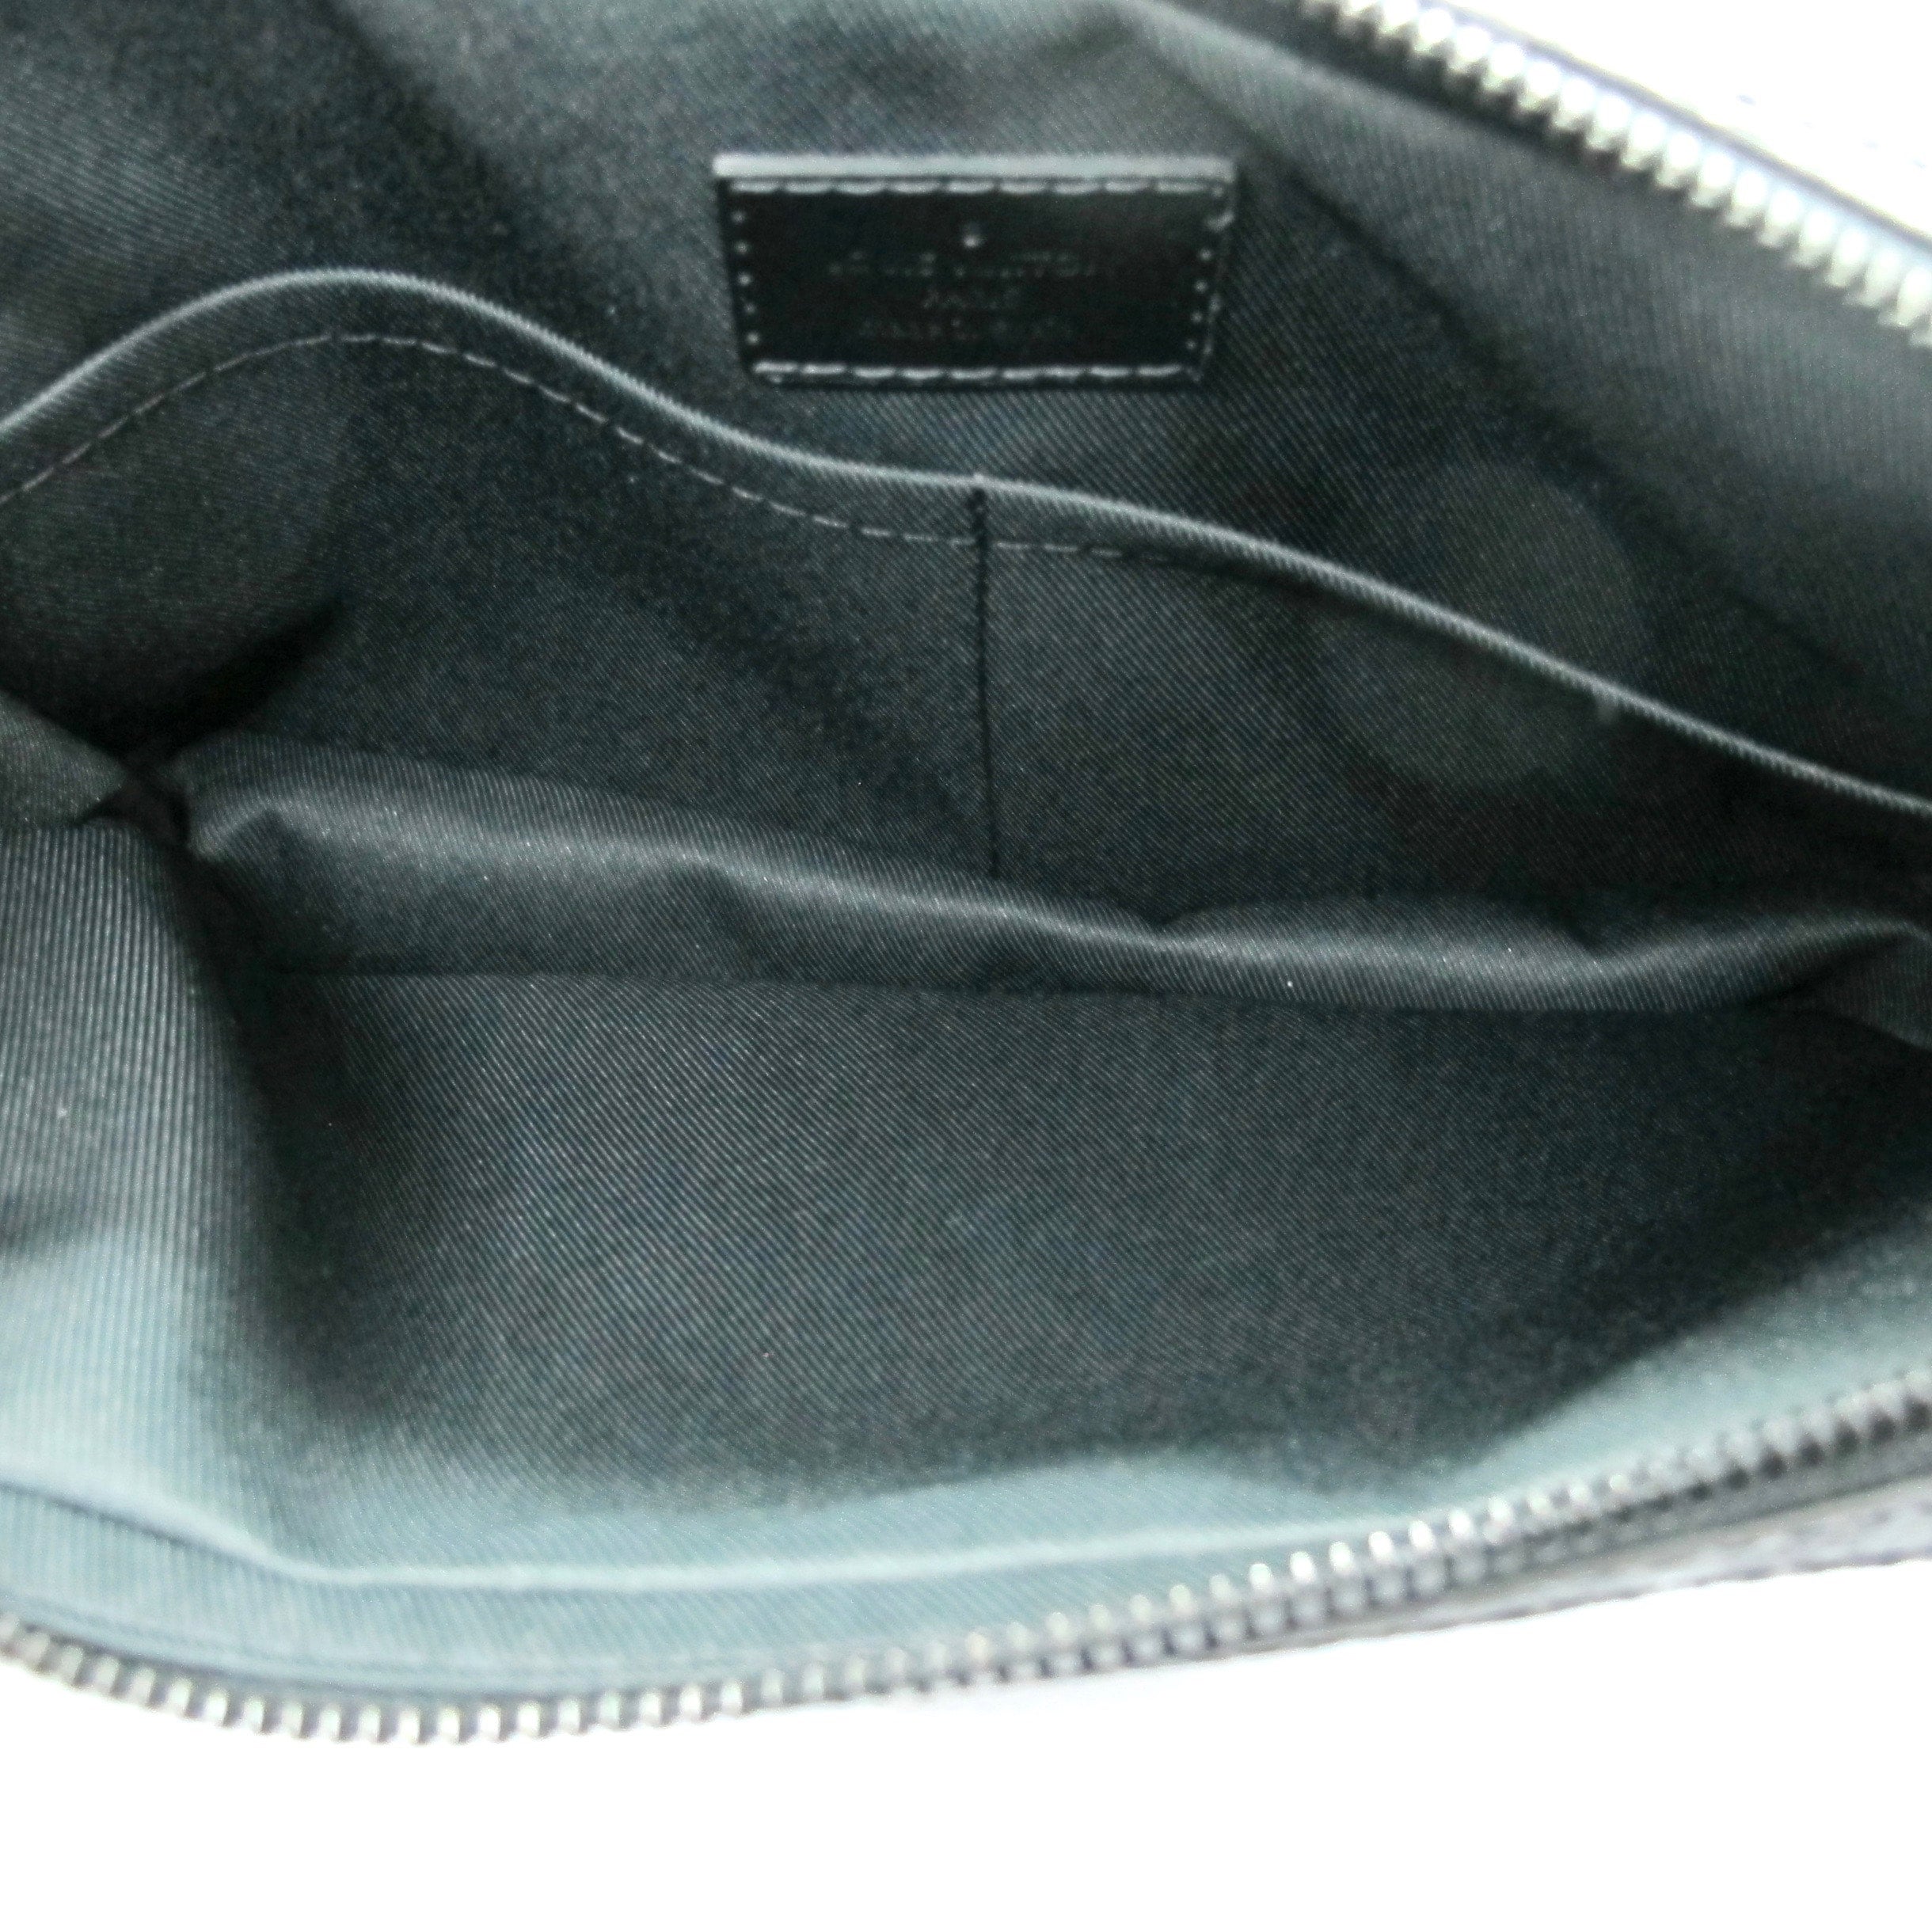 Louis Vuitton Alpha Messenger Galaxy Bag – shopxthevault